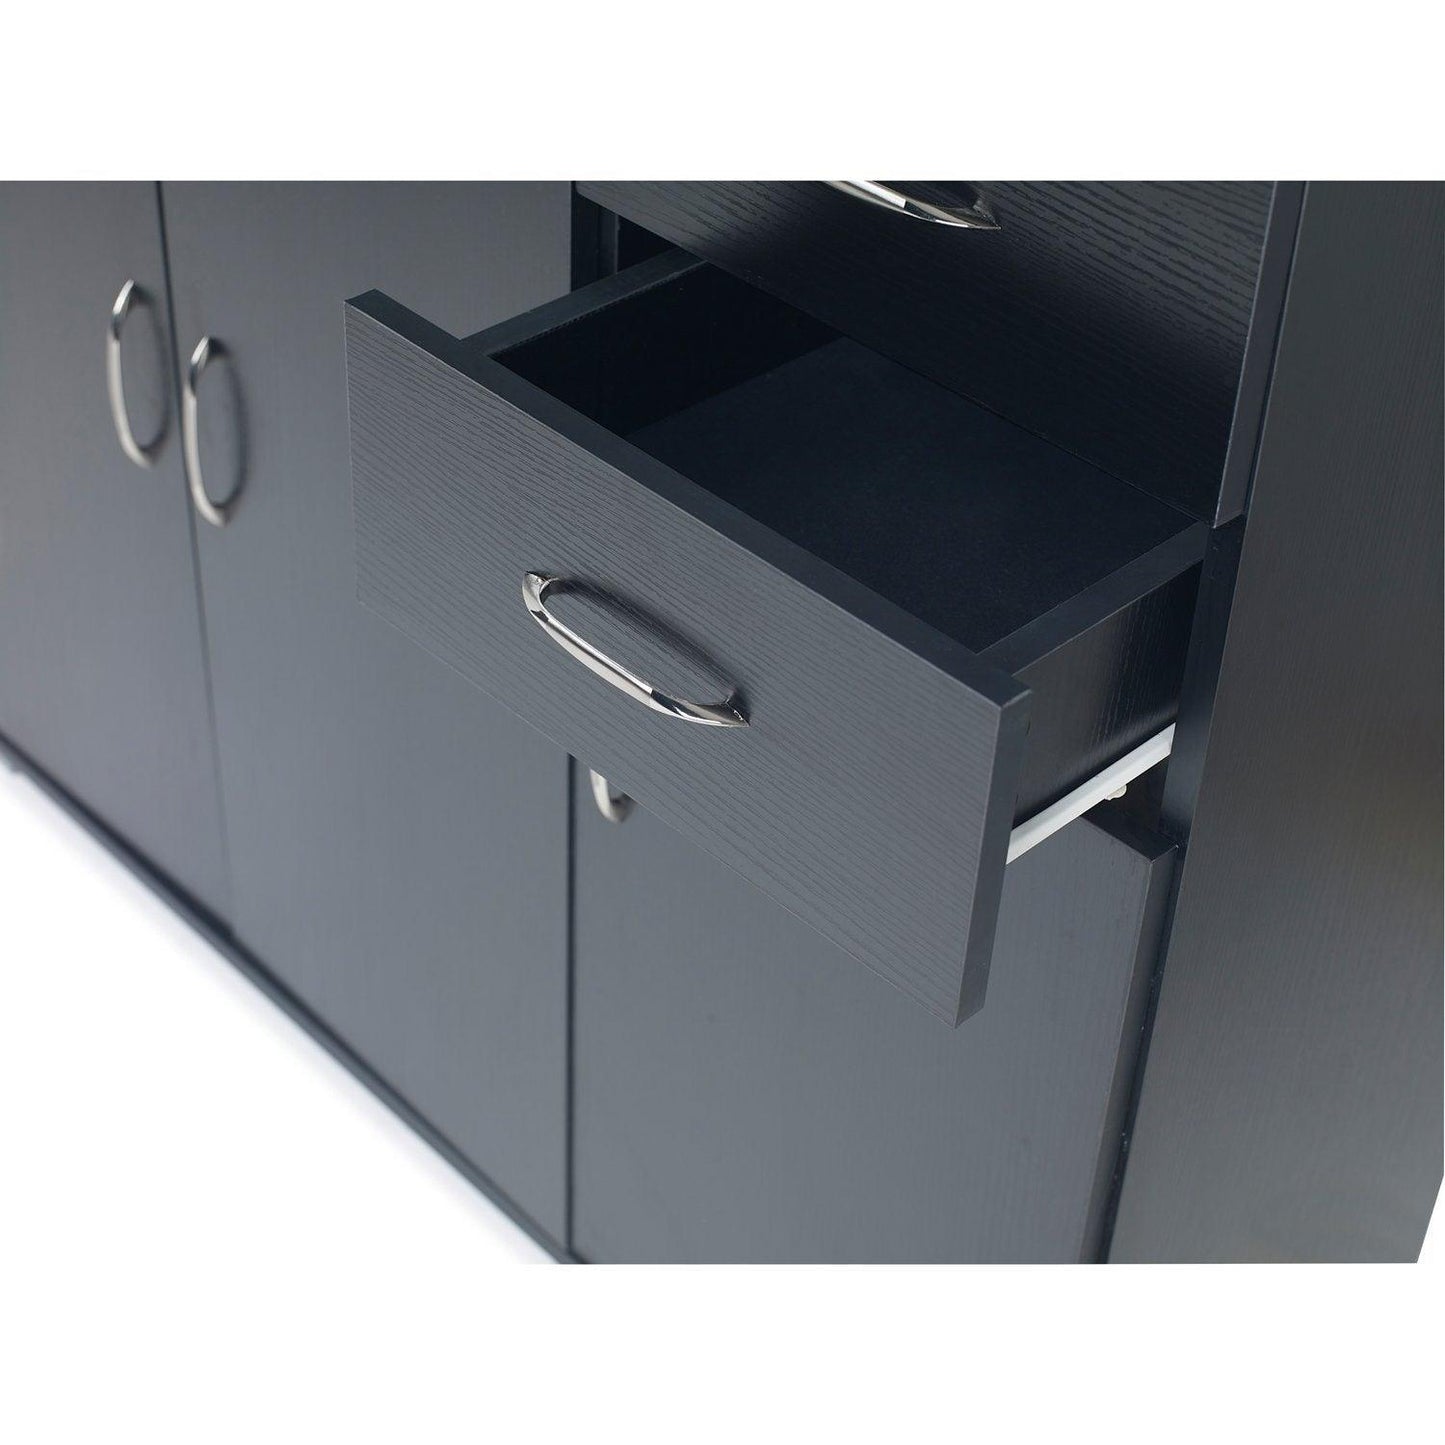 Outlet - Essie - Storage Cabinet - Home Office - Black